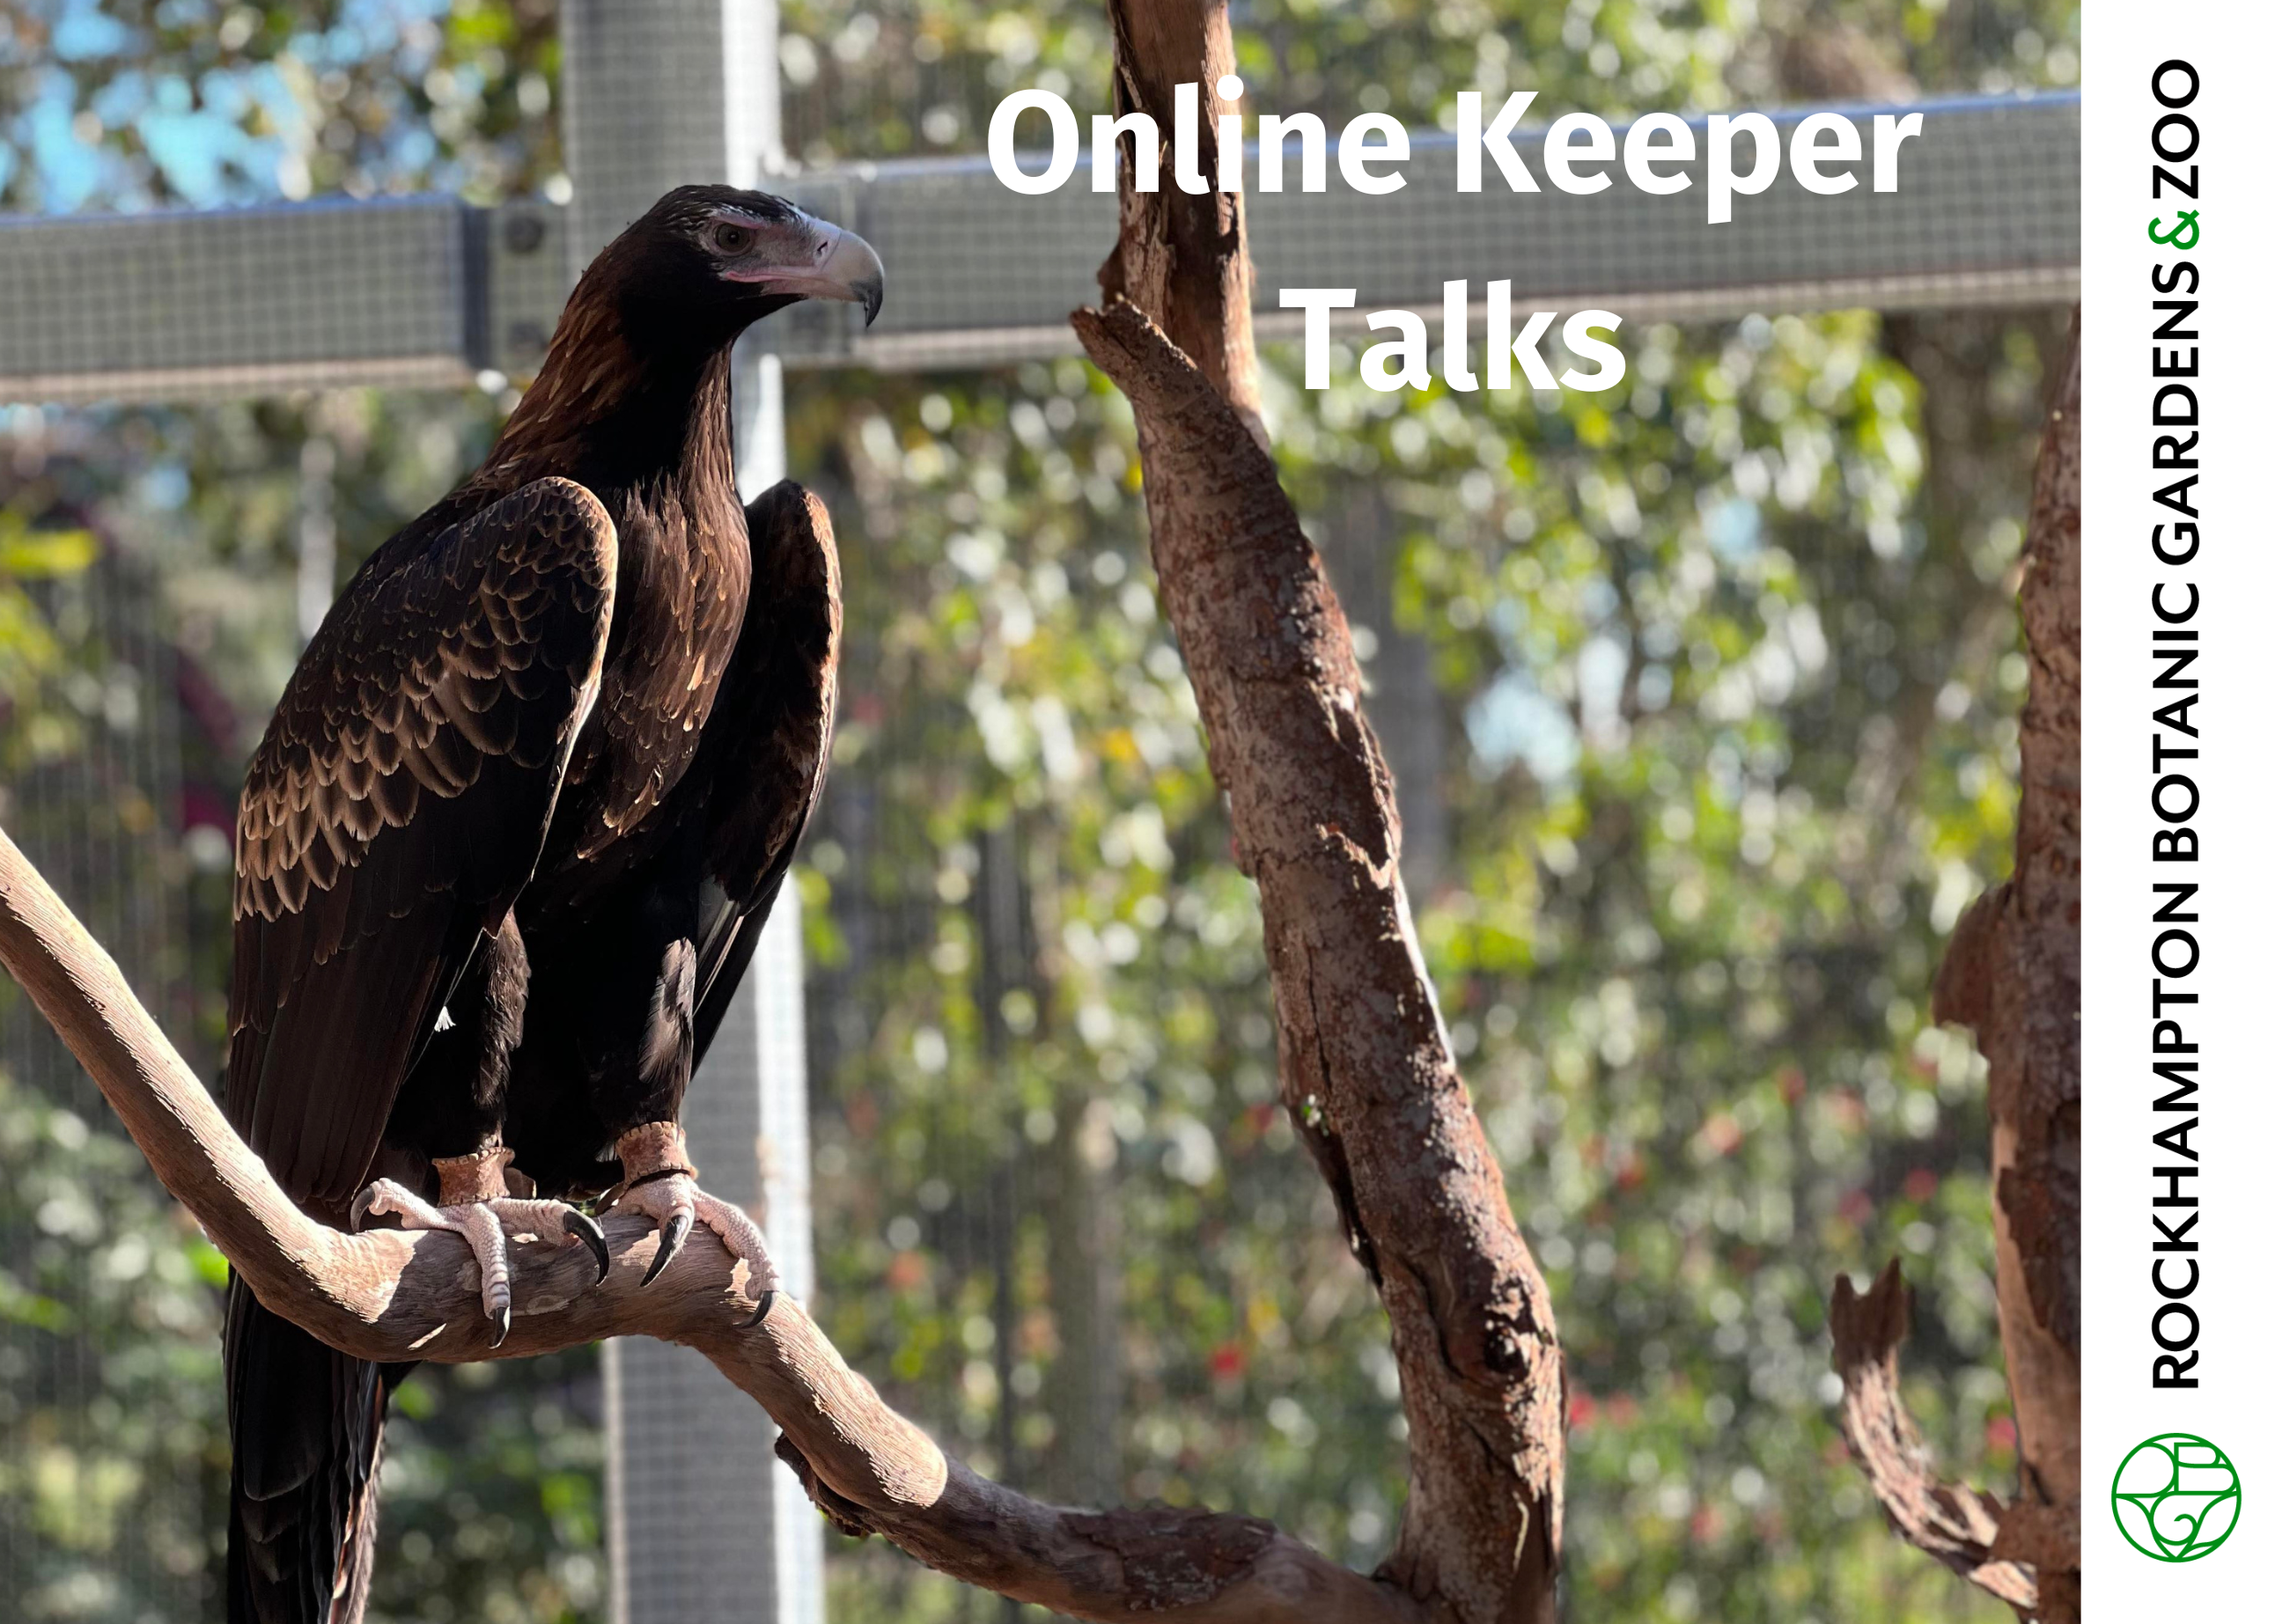 Online-keeper-talks.png